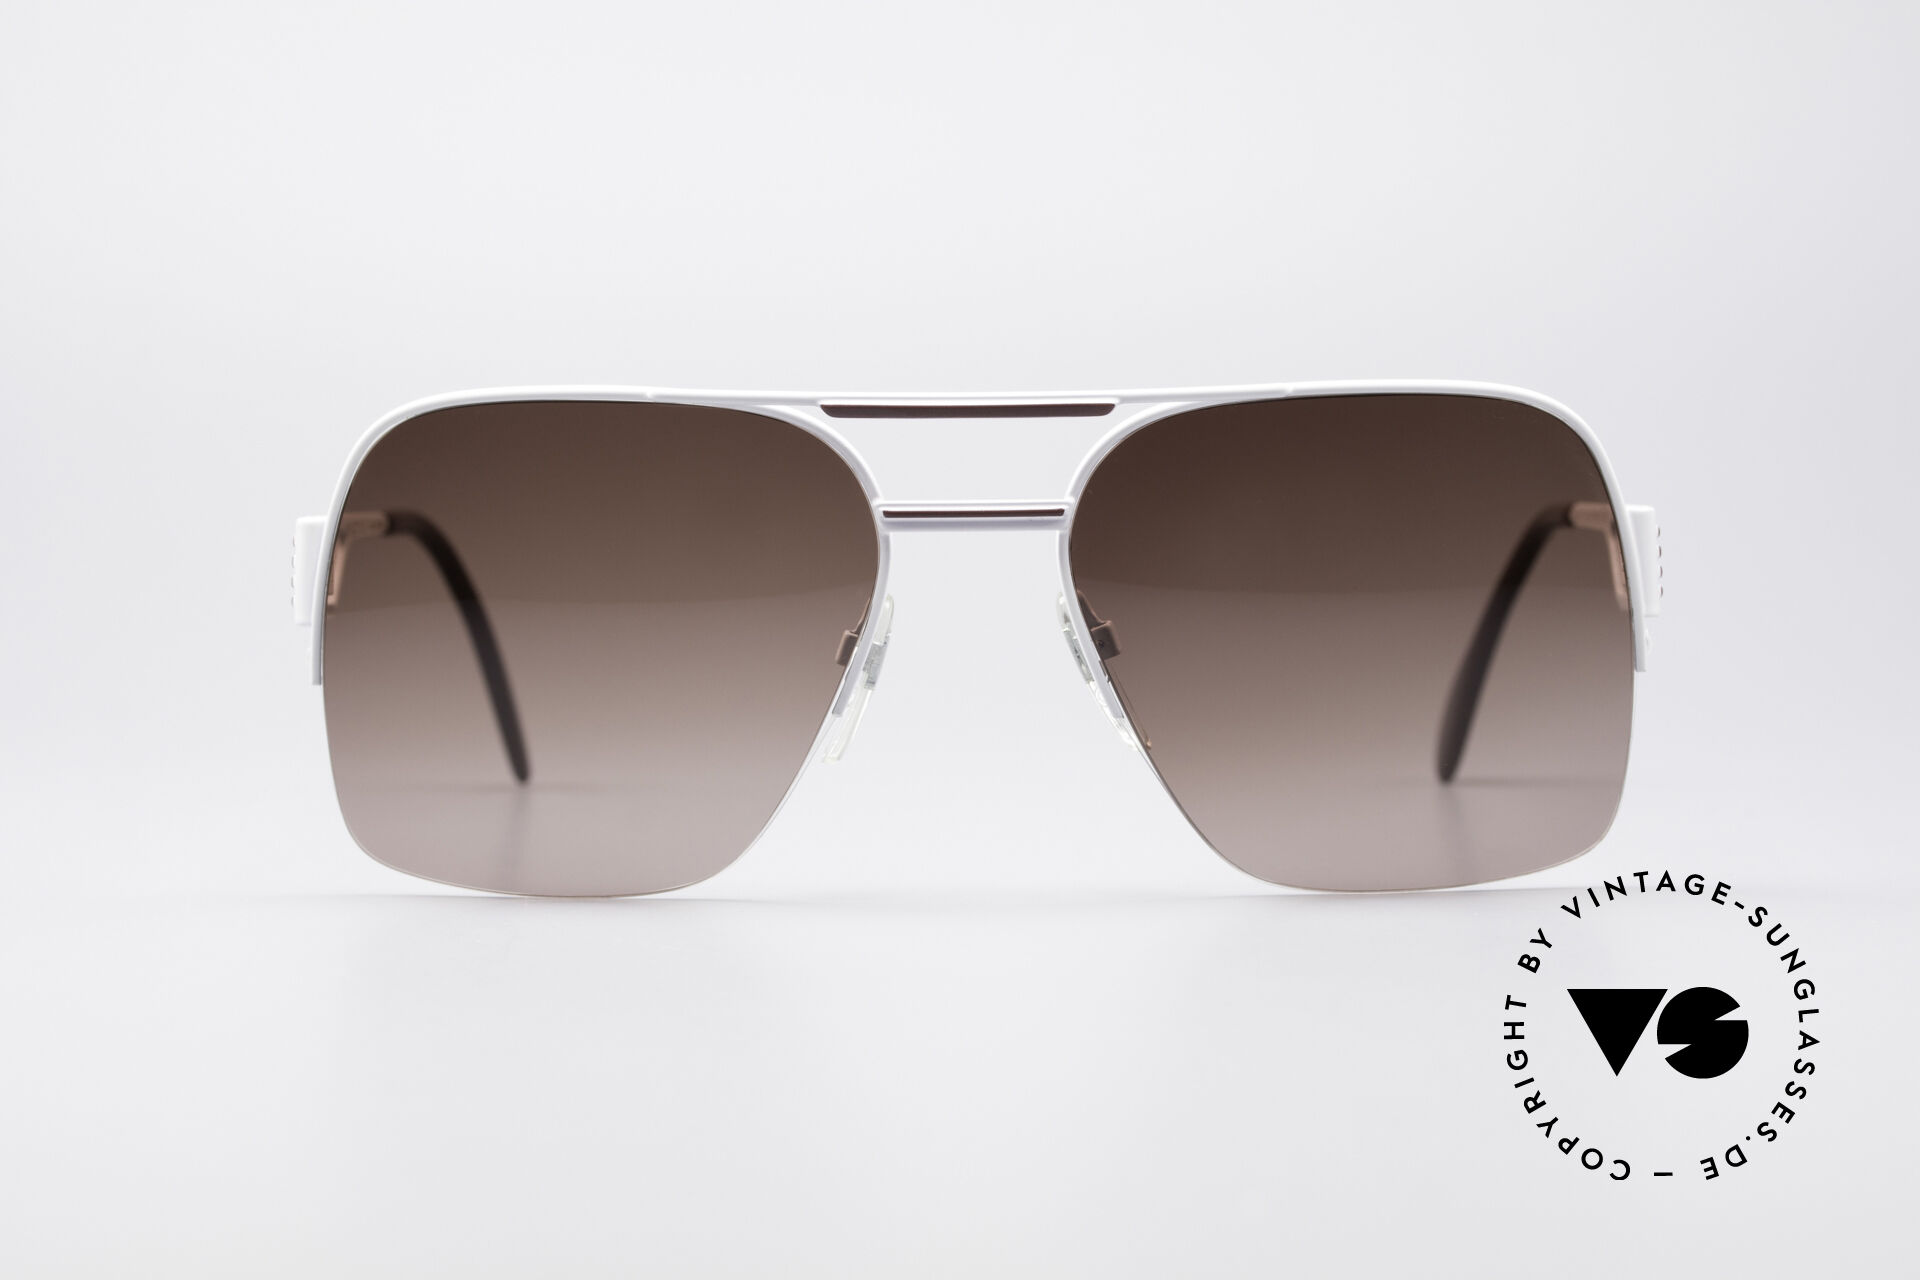 Sunglasses Neostyle Nautic 5 Cee Lo Green Vintage Shades